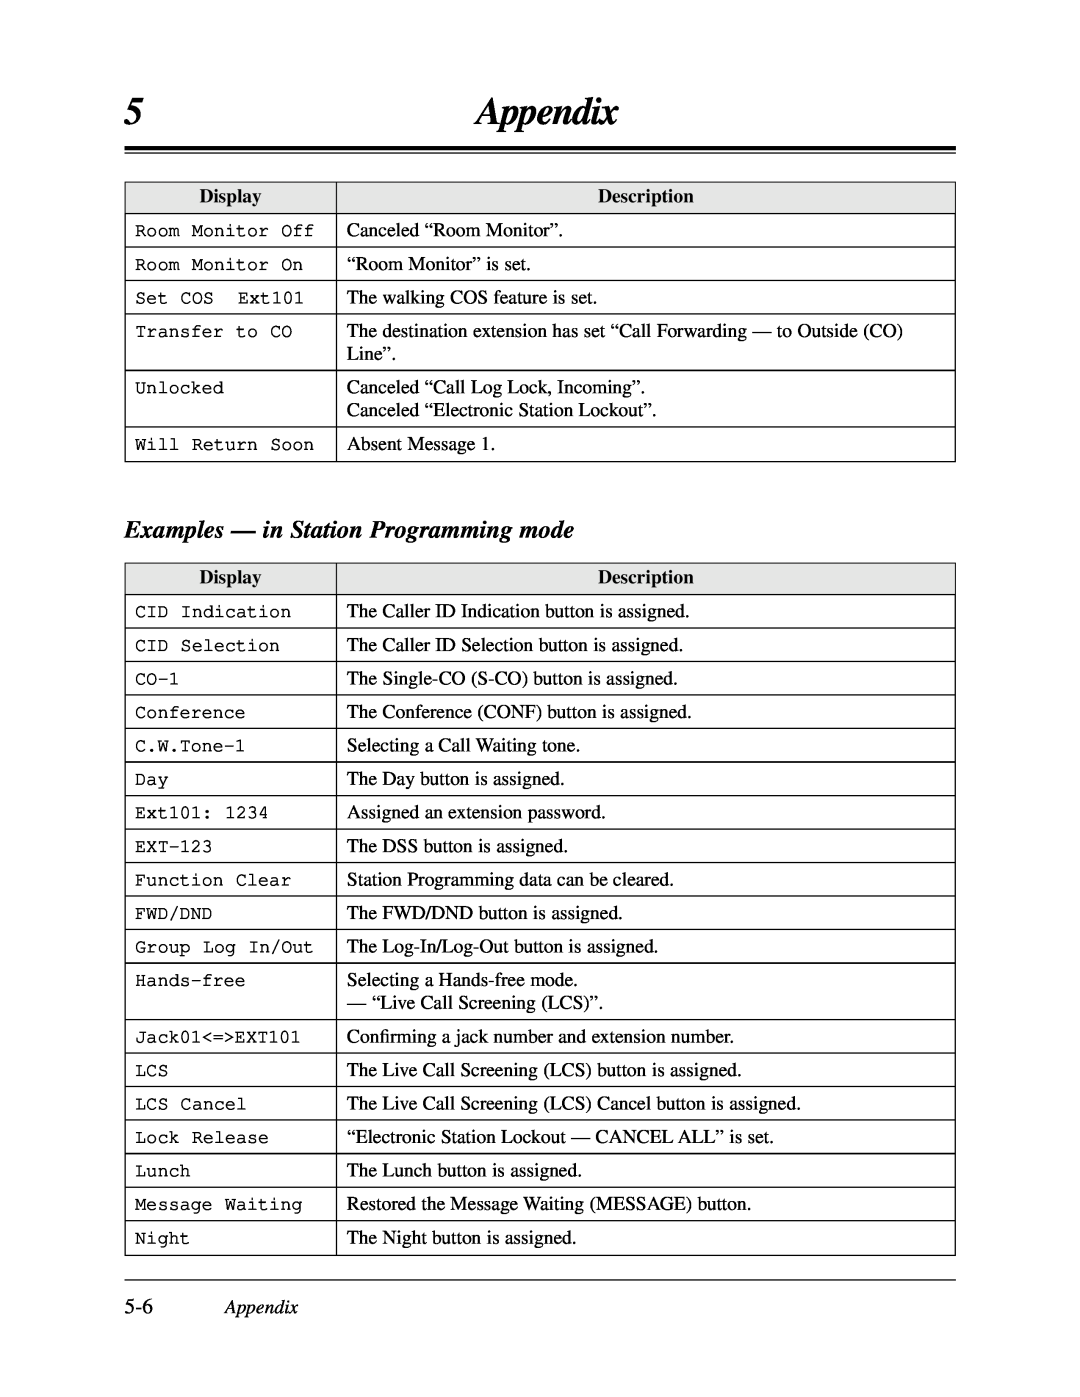 Panasonic KX-TA624 user manual Examples - in Station Programming mode, Appendix 